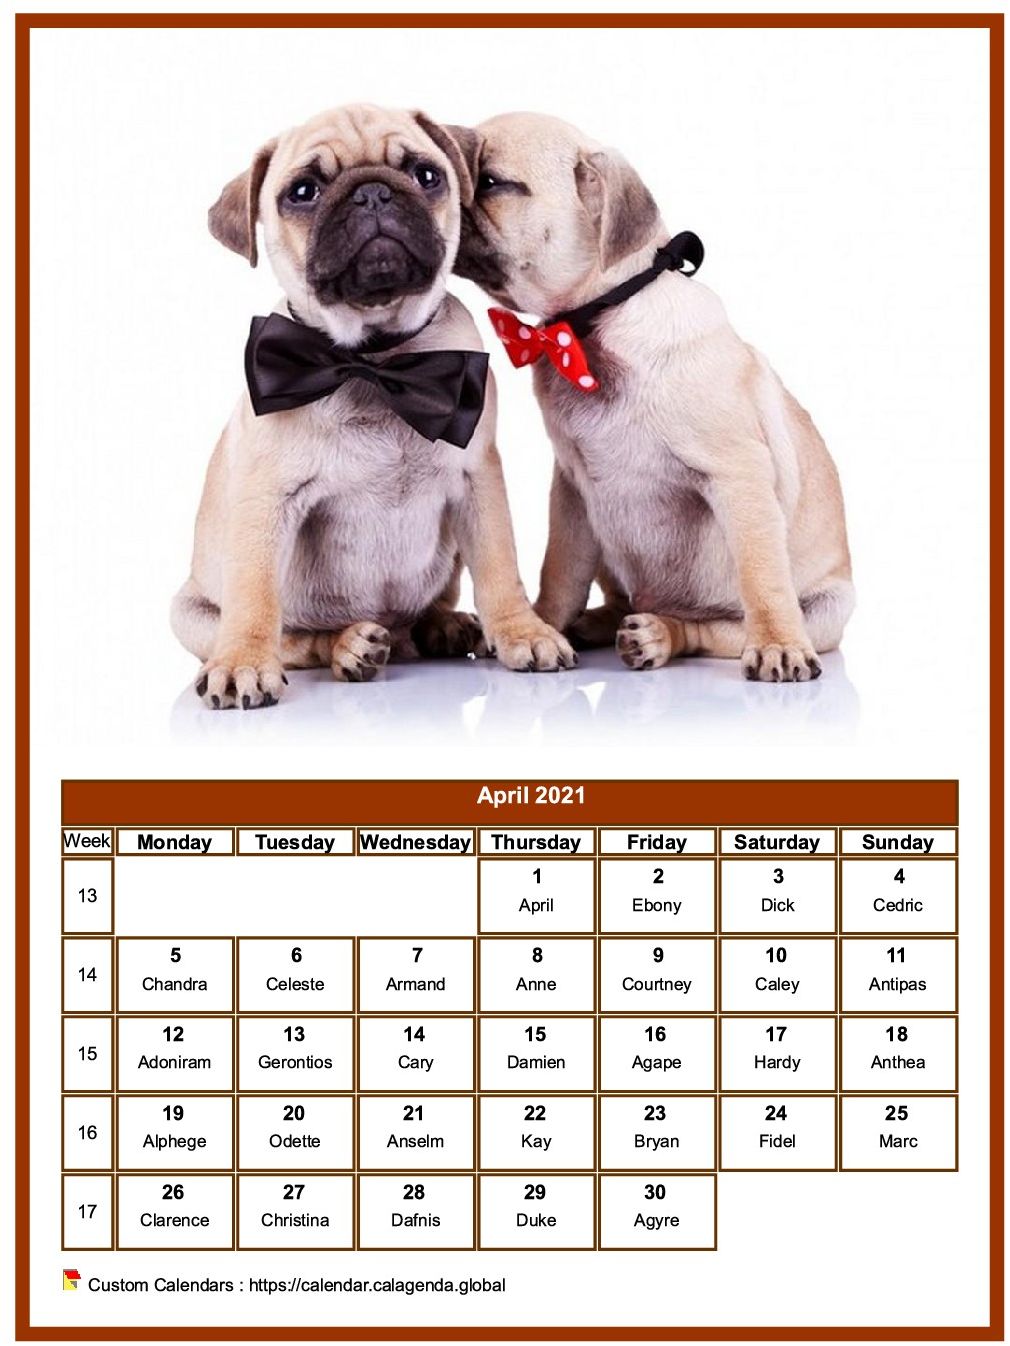 Calendar april 2021 dogs